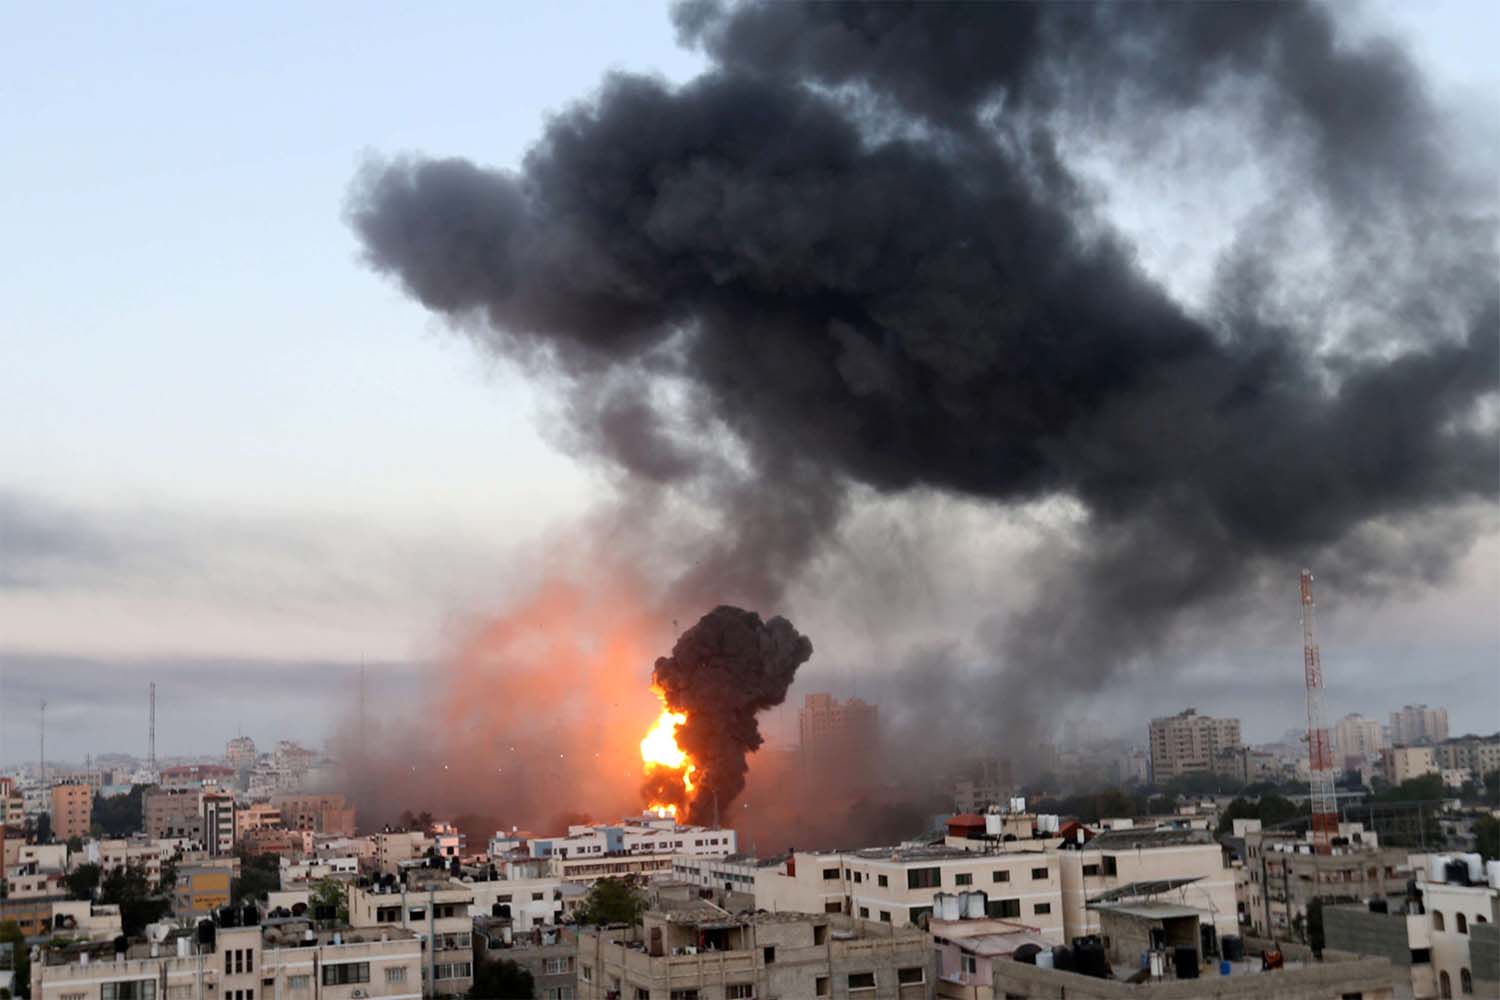 Israel said it had sent 80 jets to bomb Gaza